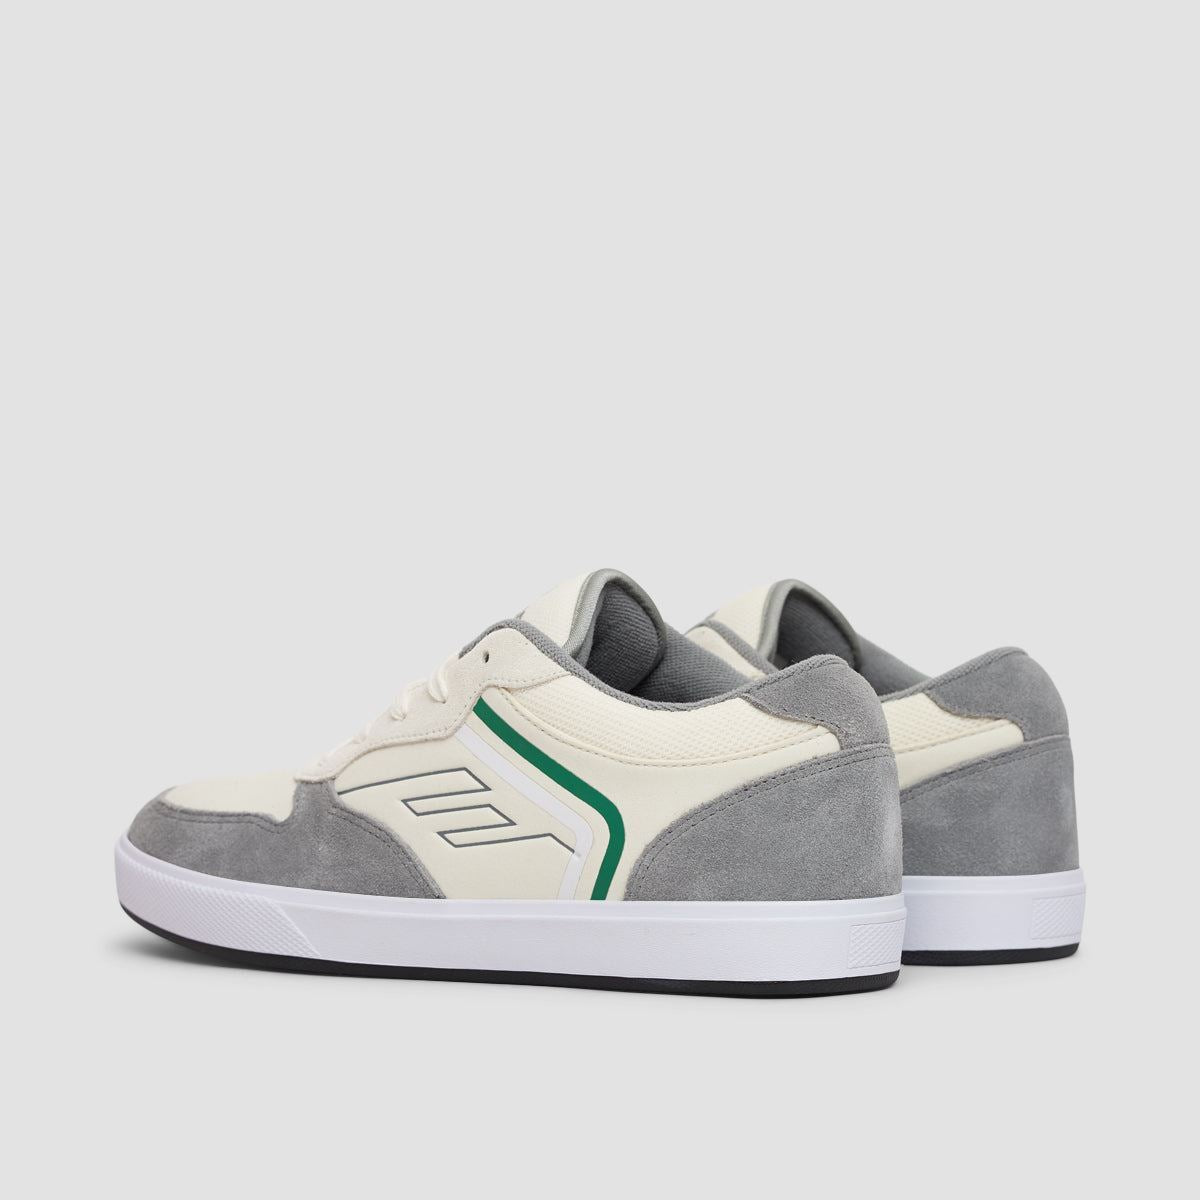 Emerica KSL G6 Shoes - Grey/Tan